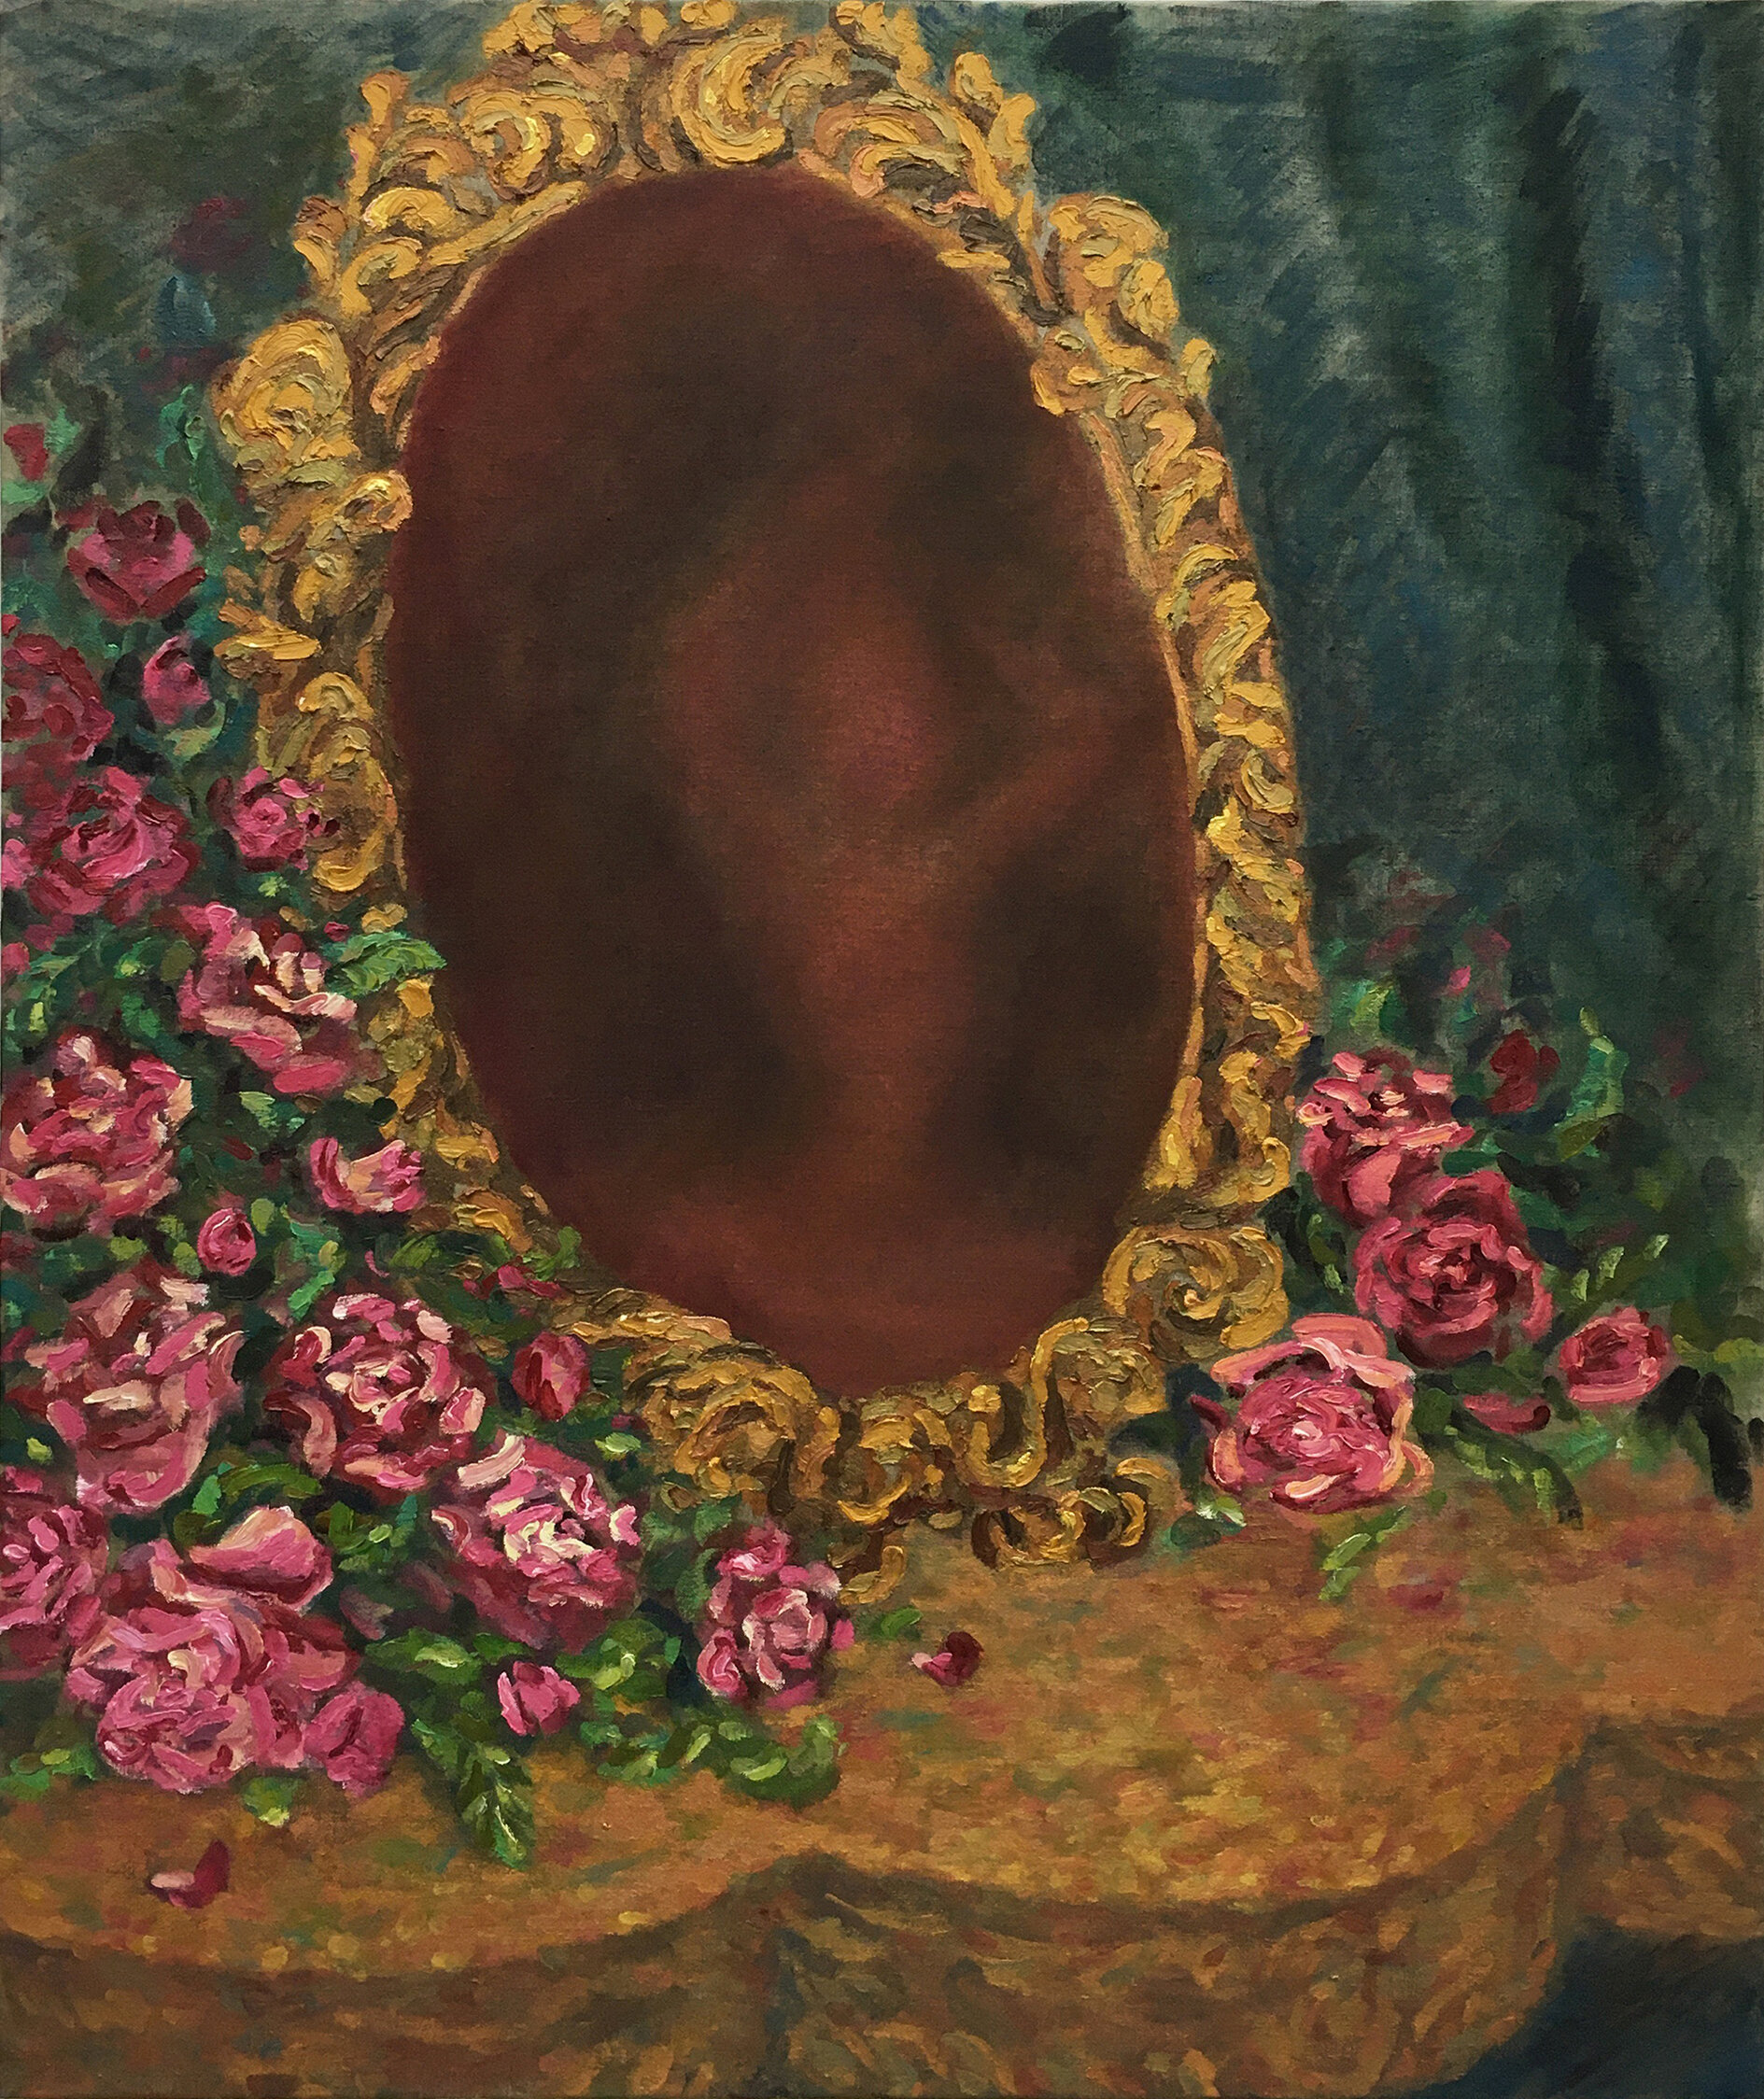 Xu Yang, Girl in the Mirror 15012020, 2020, Oil on linen 95 x 80cm.jpeg